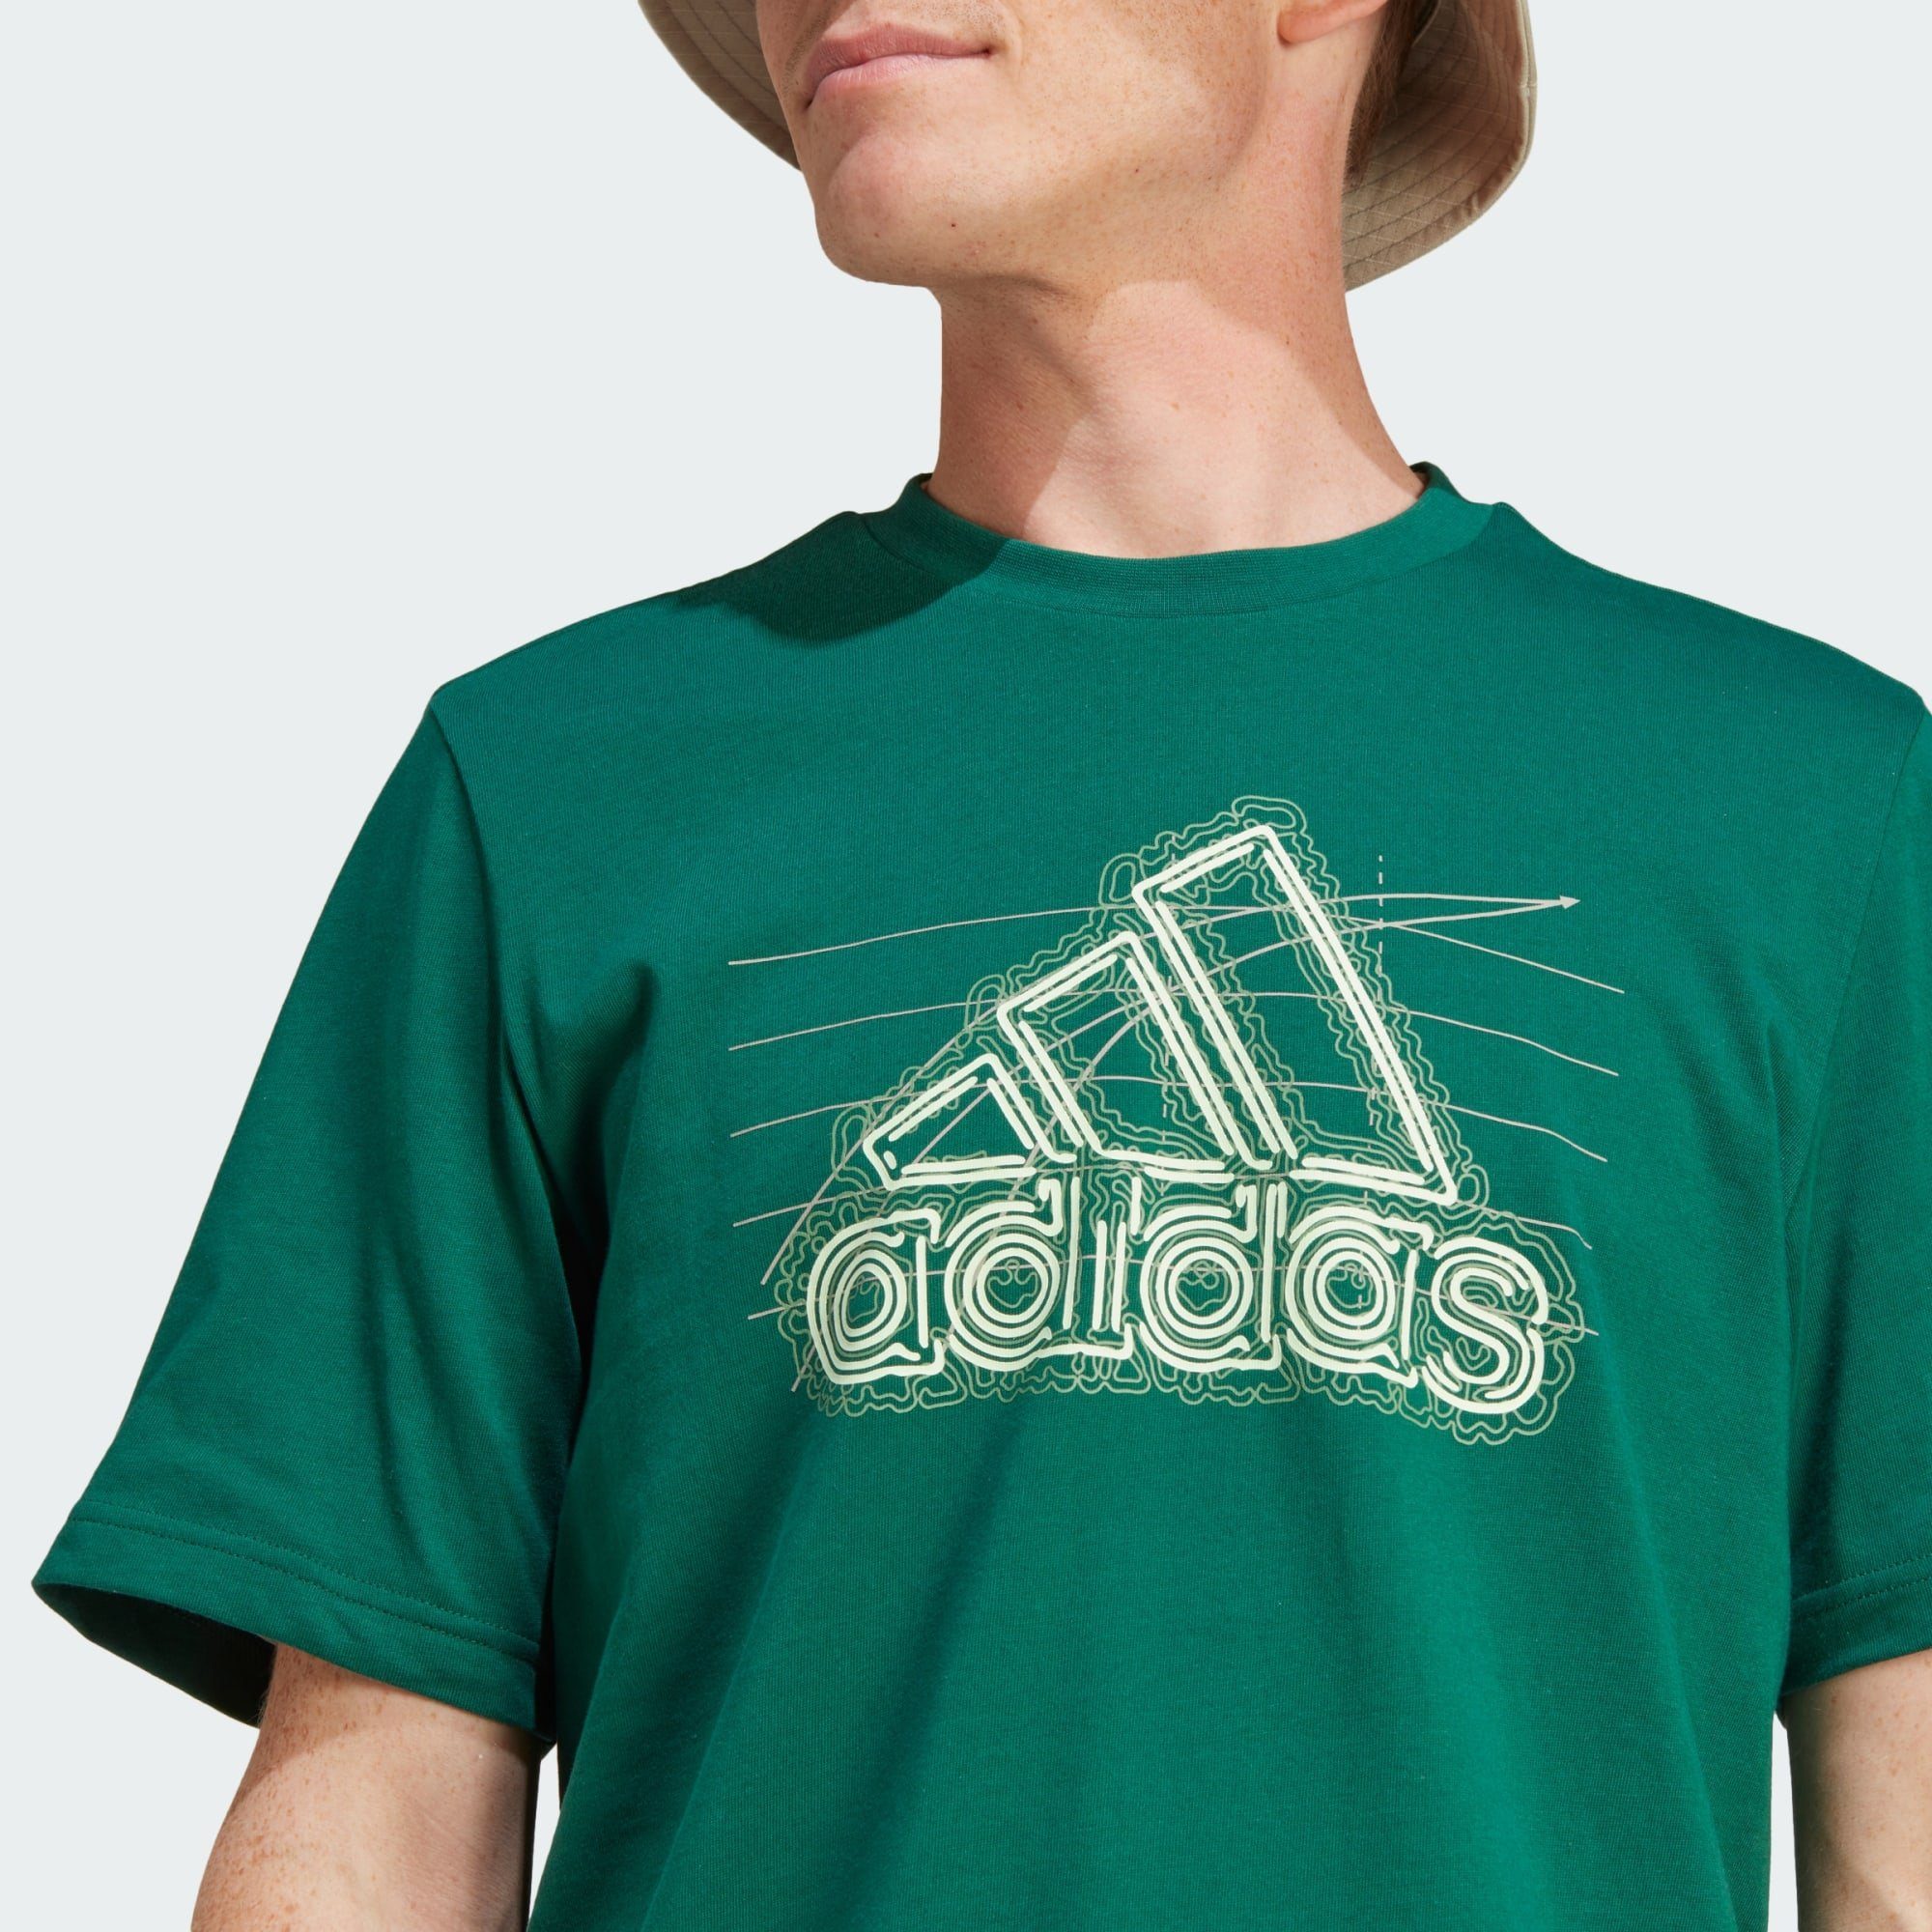 adidas Sportswear T-Shirt GROWTH Green BADGE Collegiate T-SHIRT GRAPHIC